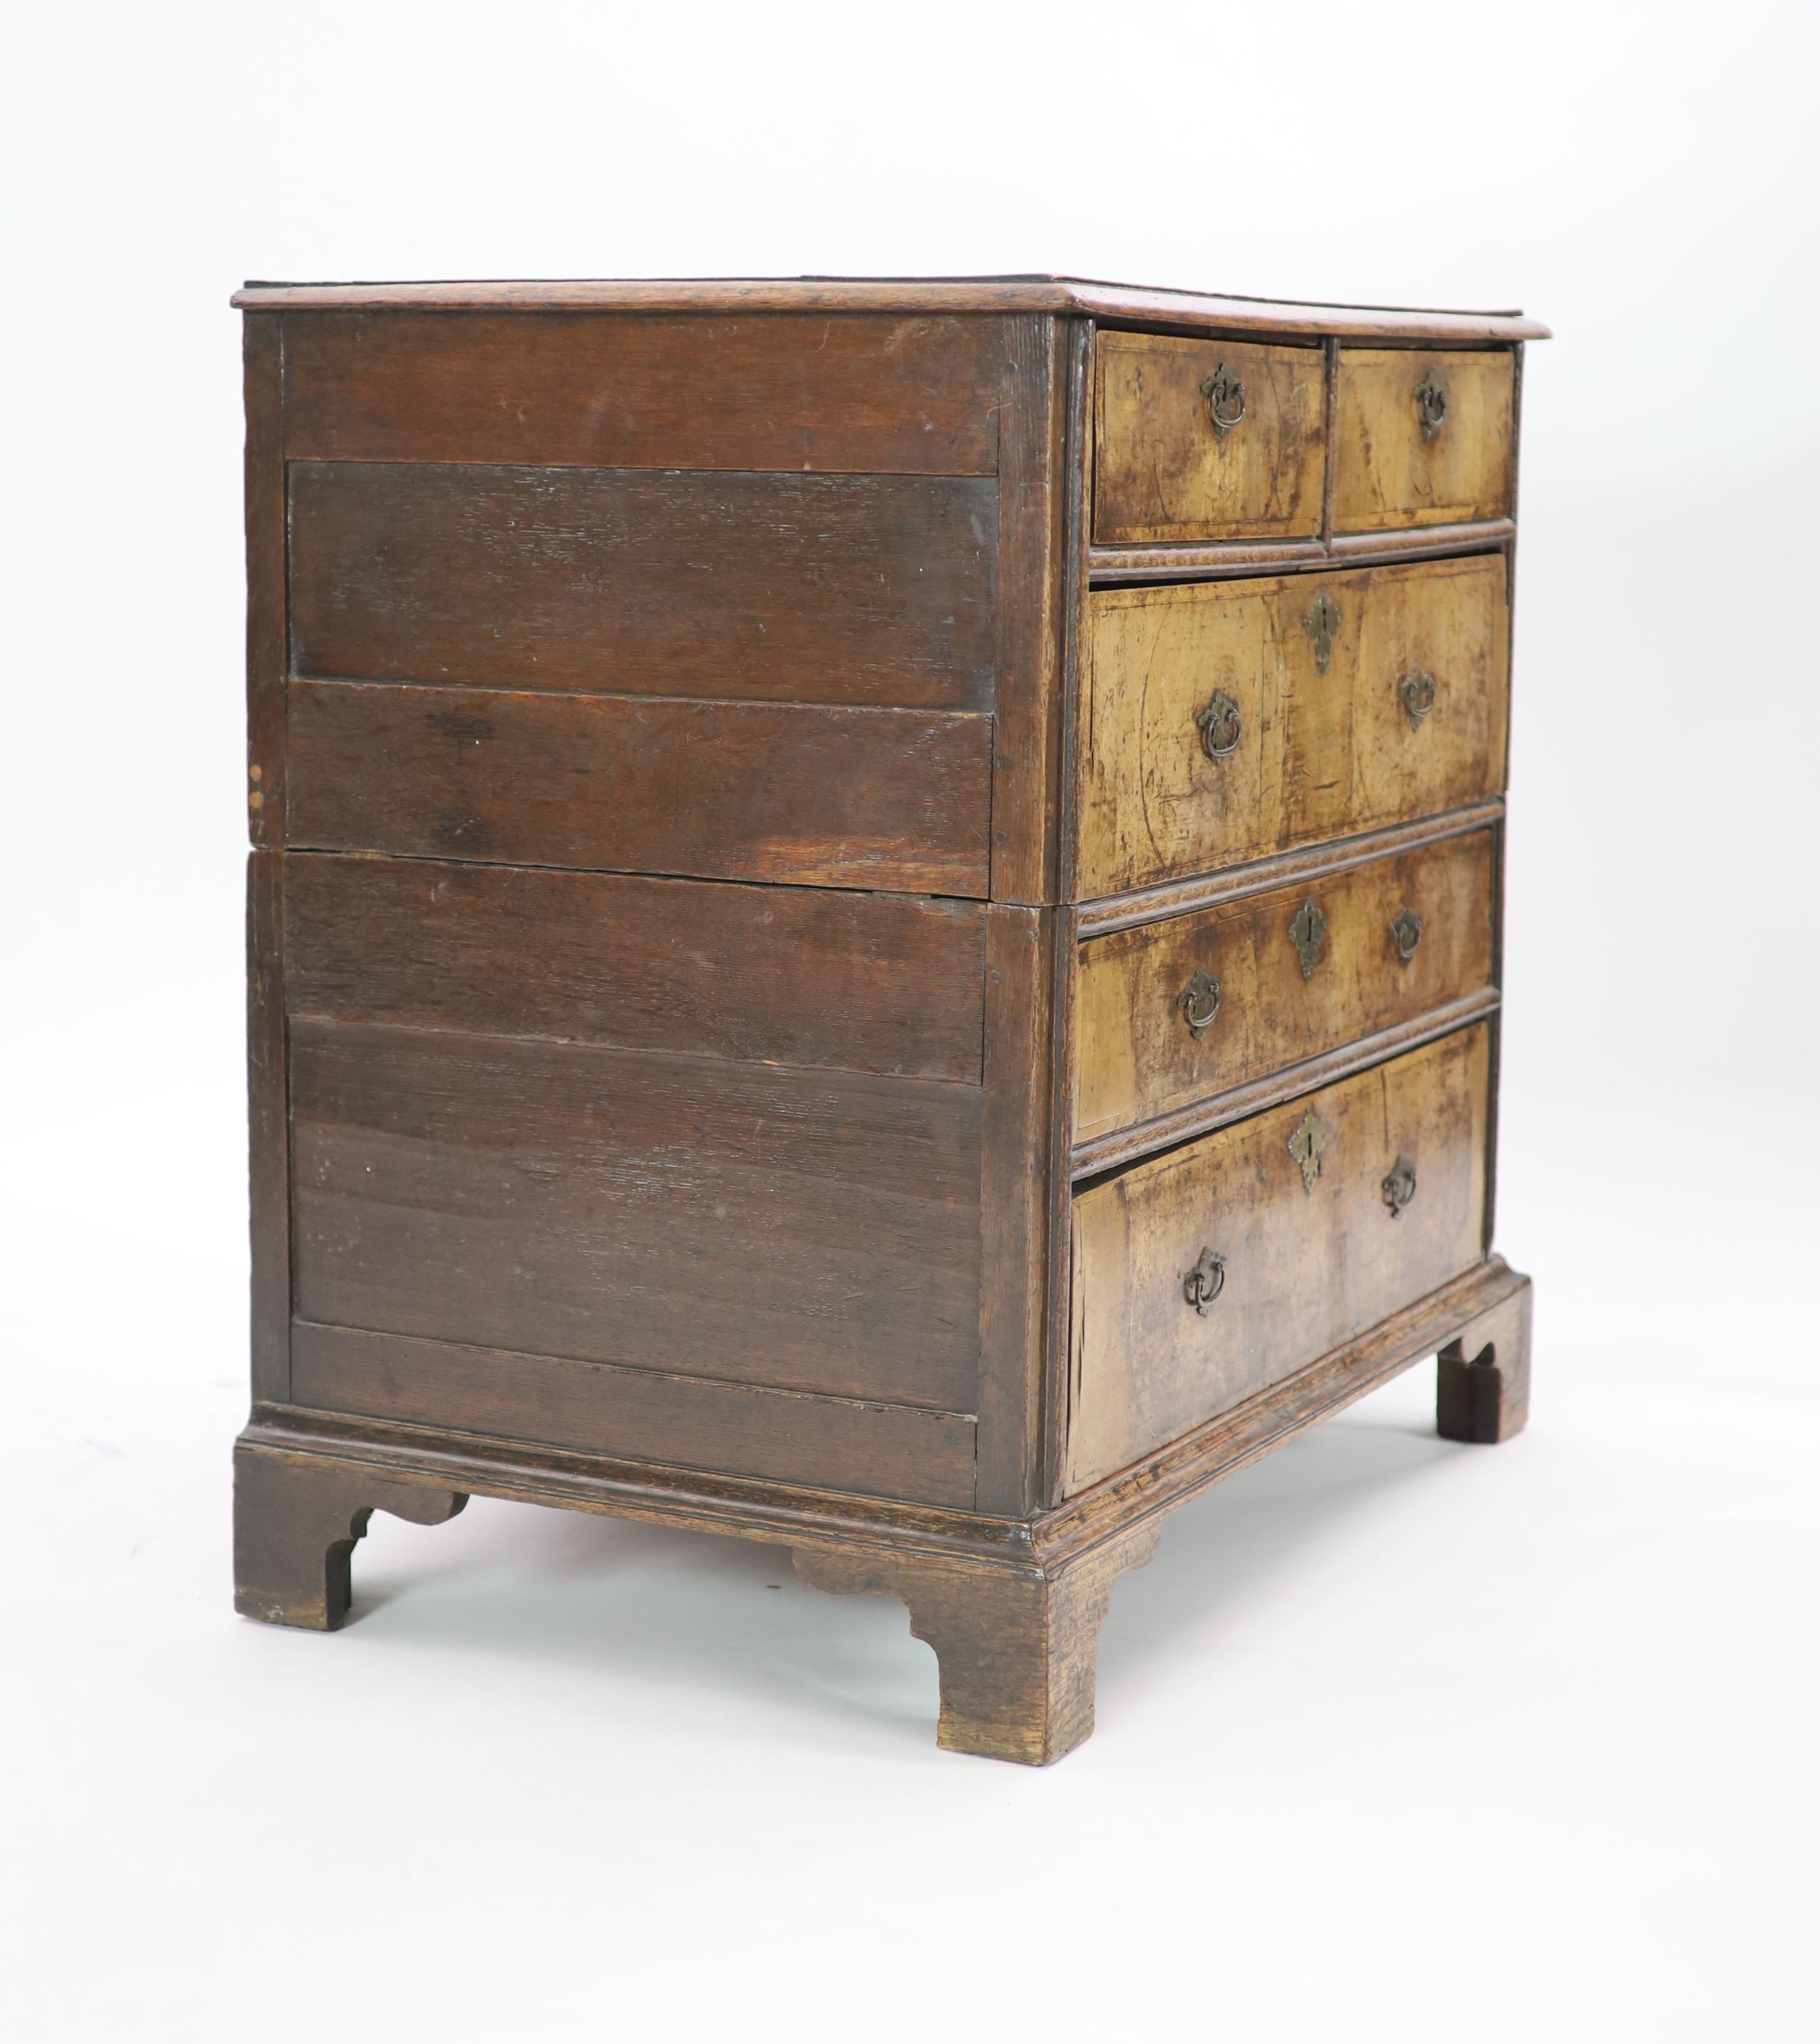 An early 18th century oak and walnut chest, W.94cm D.61cm H.91cm